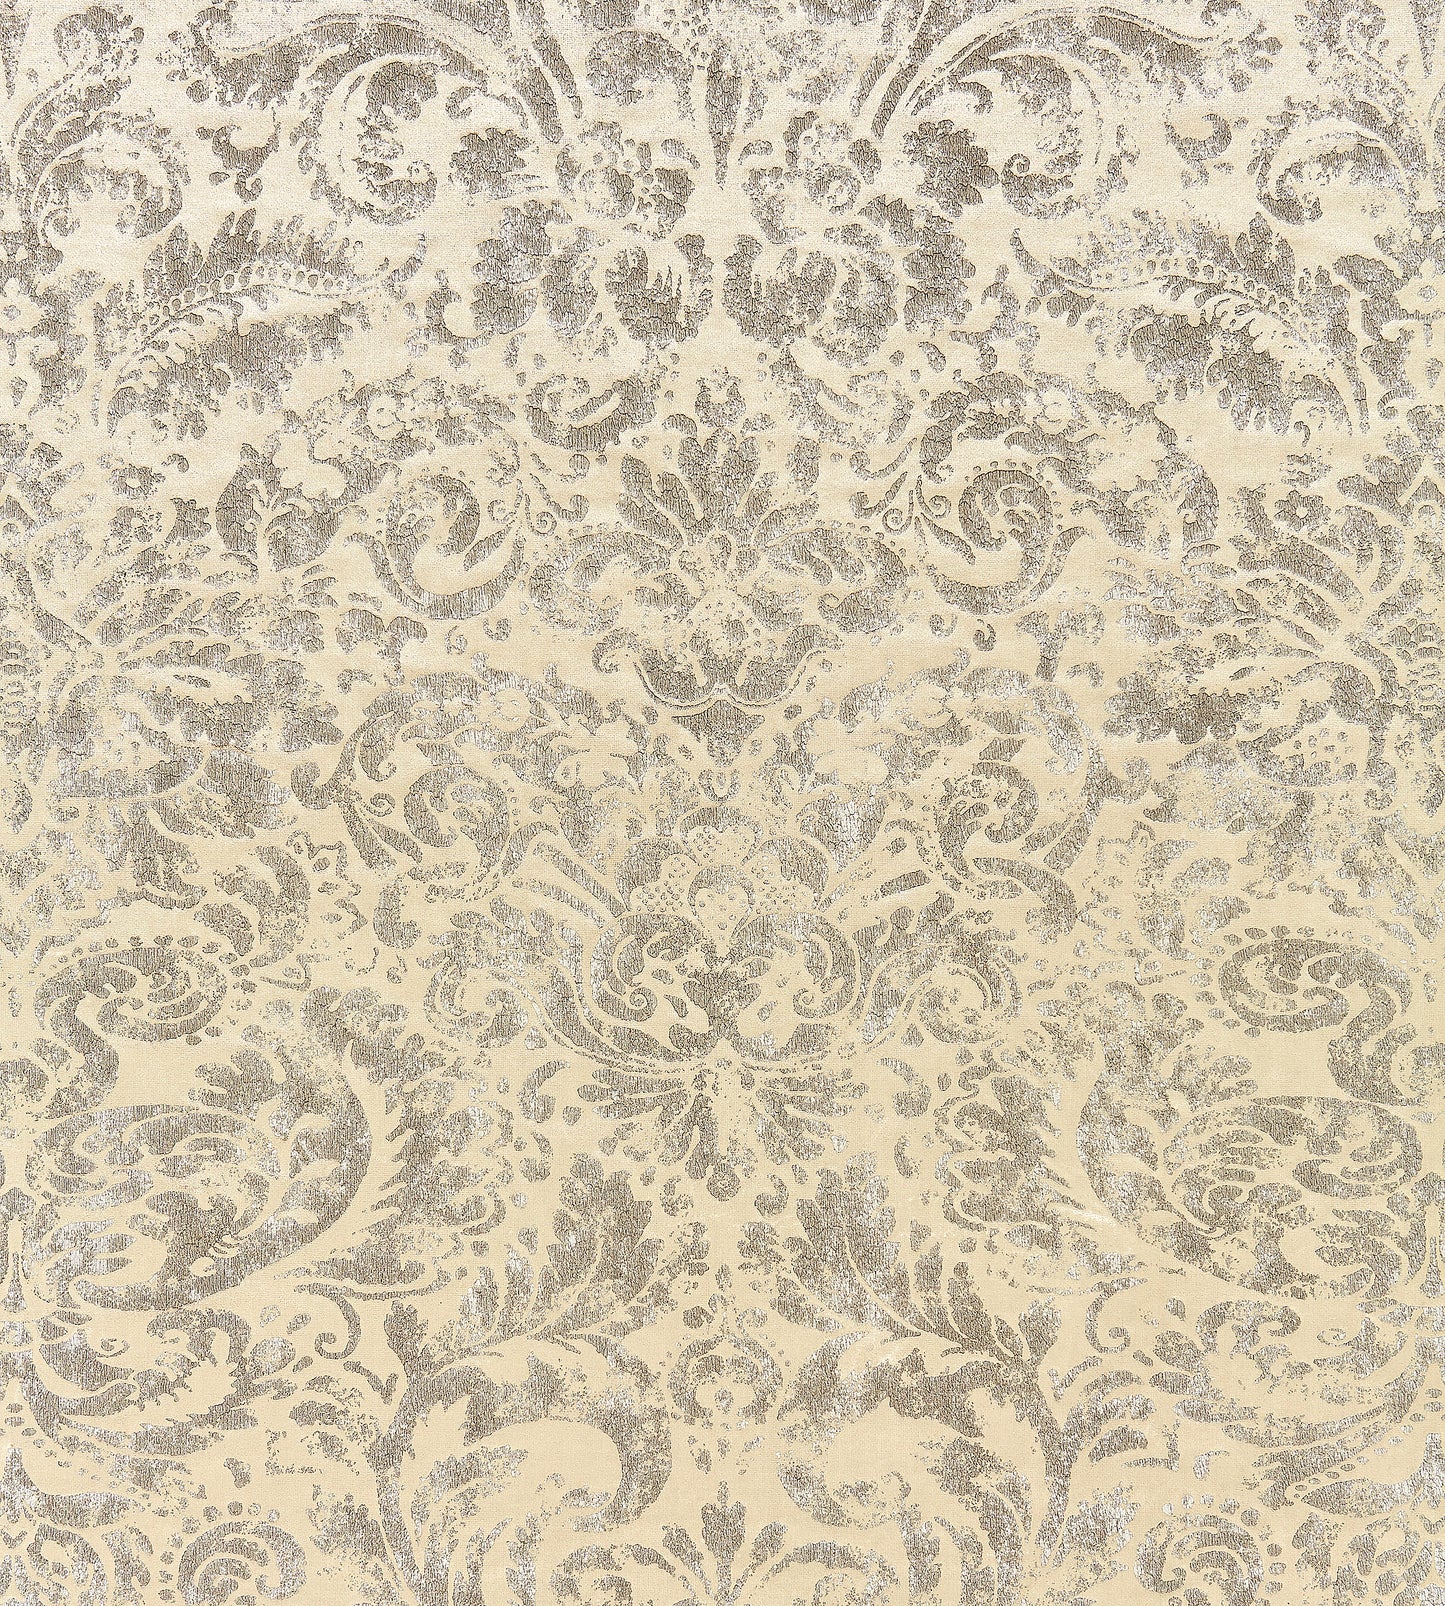 Purchase Scalamandre Fabric Pattern SC 000116592, Palladio Velvet Damask Antique Silver 1